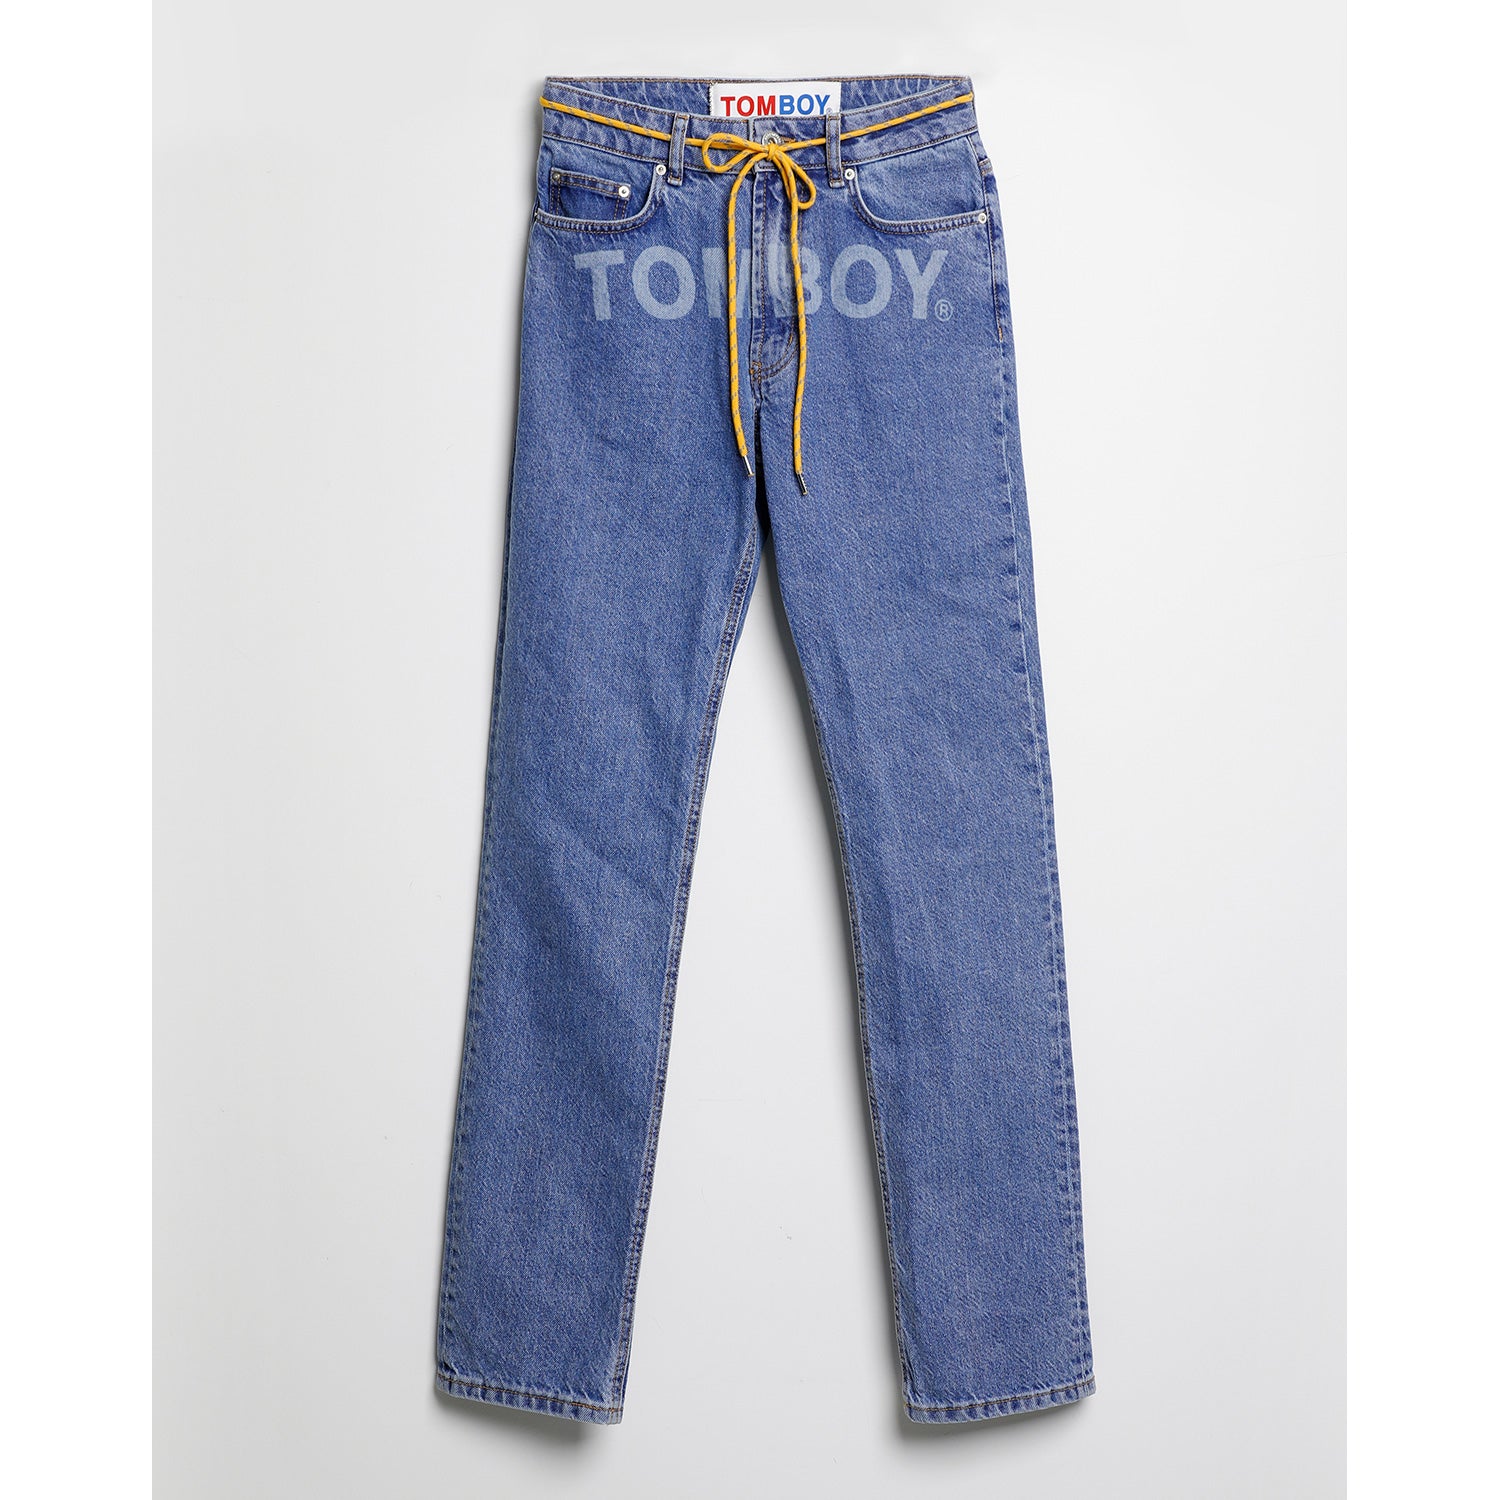 Tomboy Elegante Denim Pants - Vintage Blue